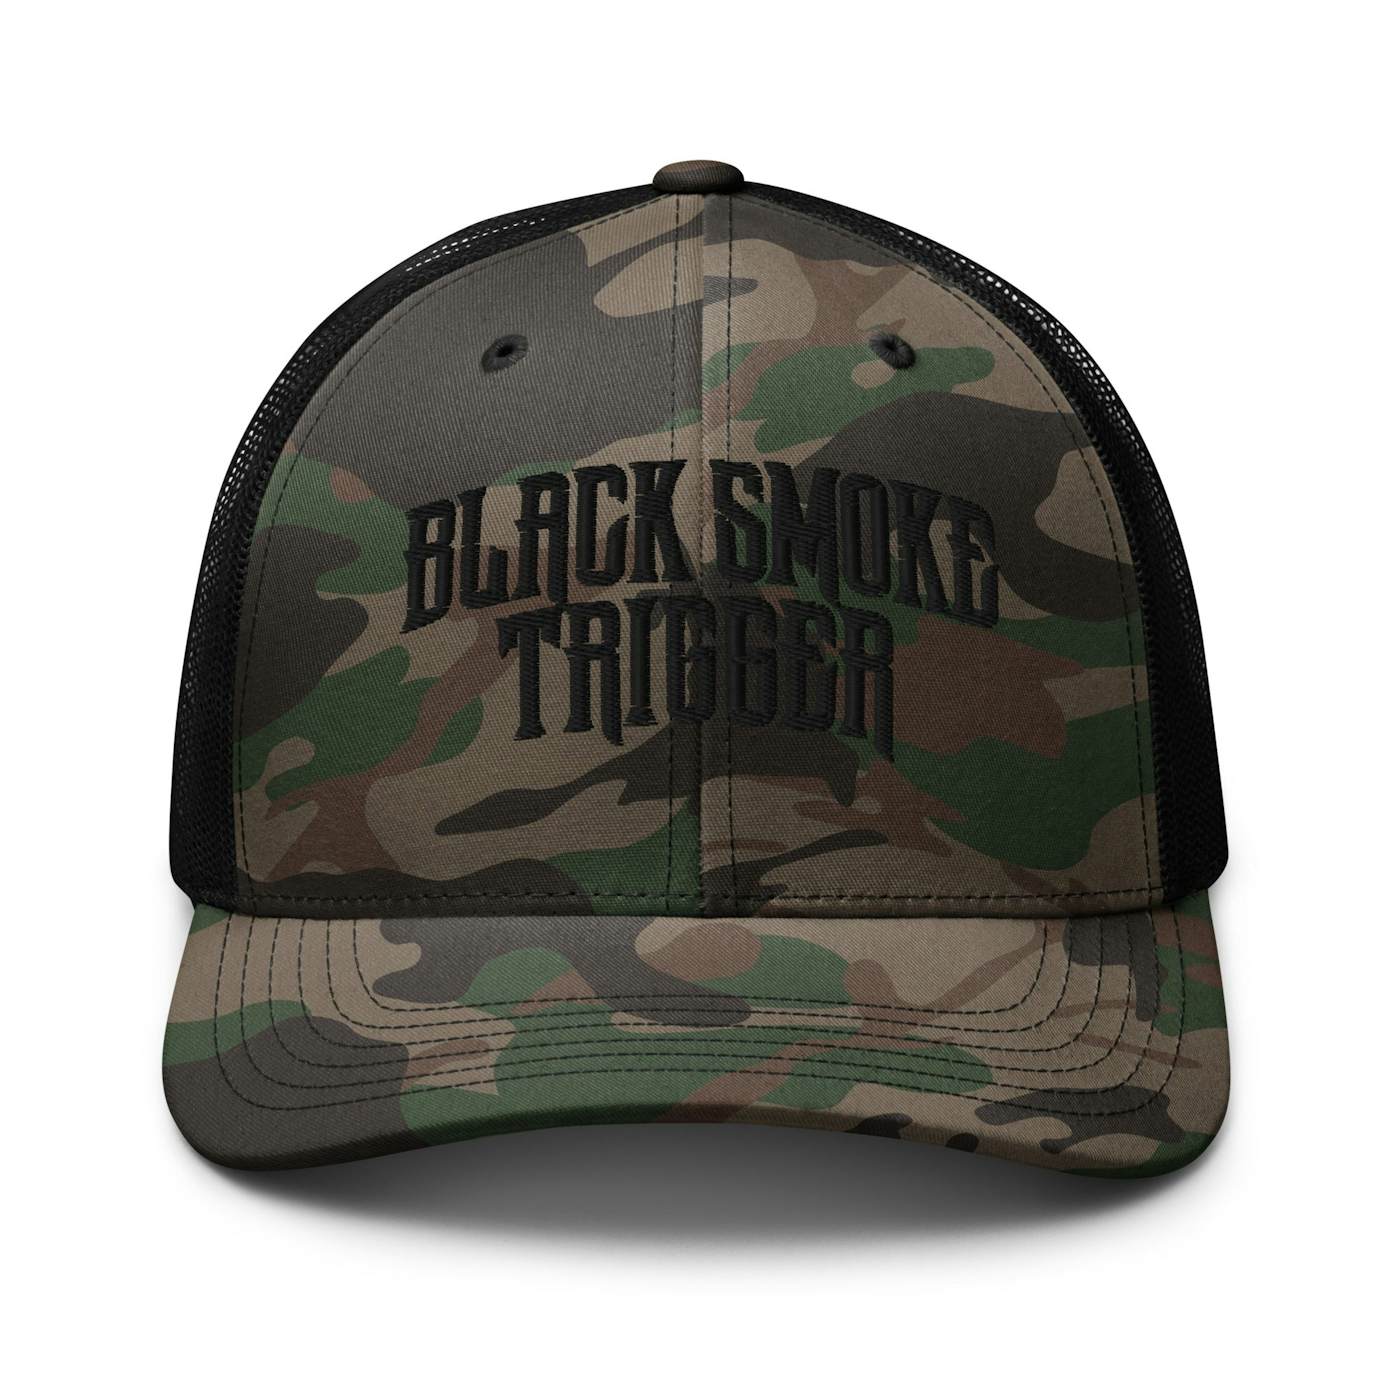 Black Smoke Trigger BST Camo Trucker Hat